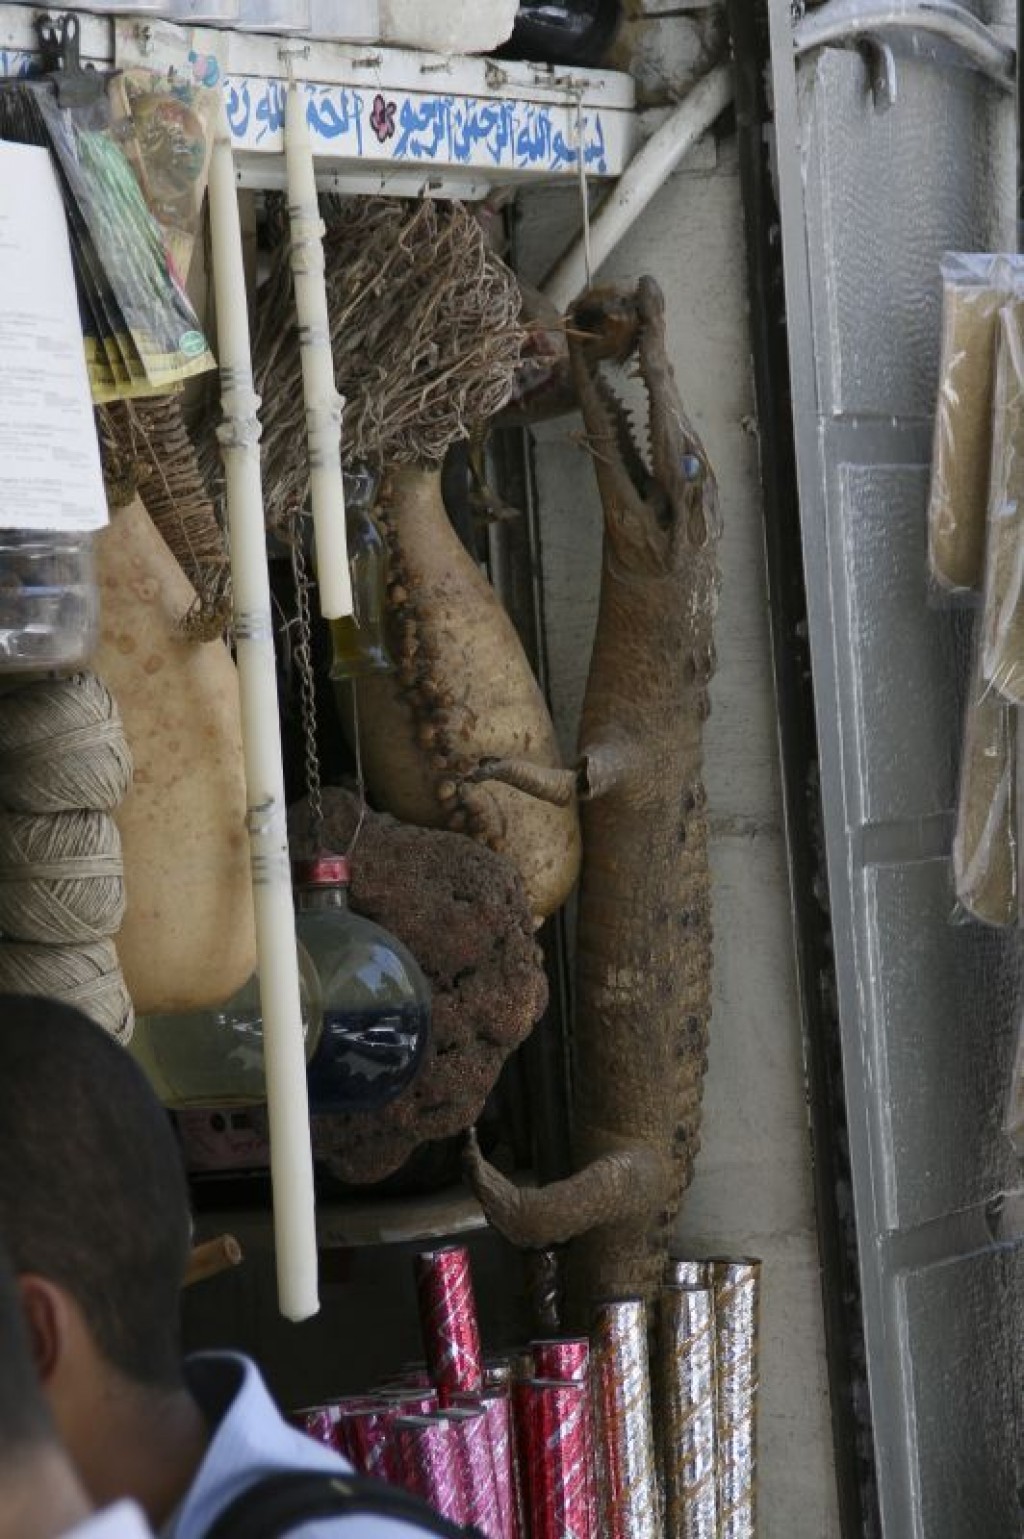 Dried alligator in Arabic Medicine Stalls, traditional medicine